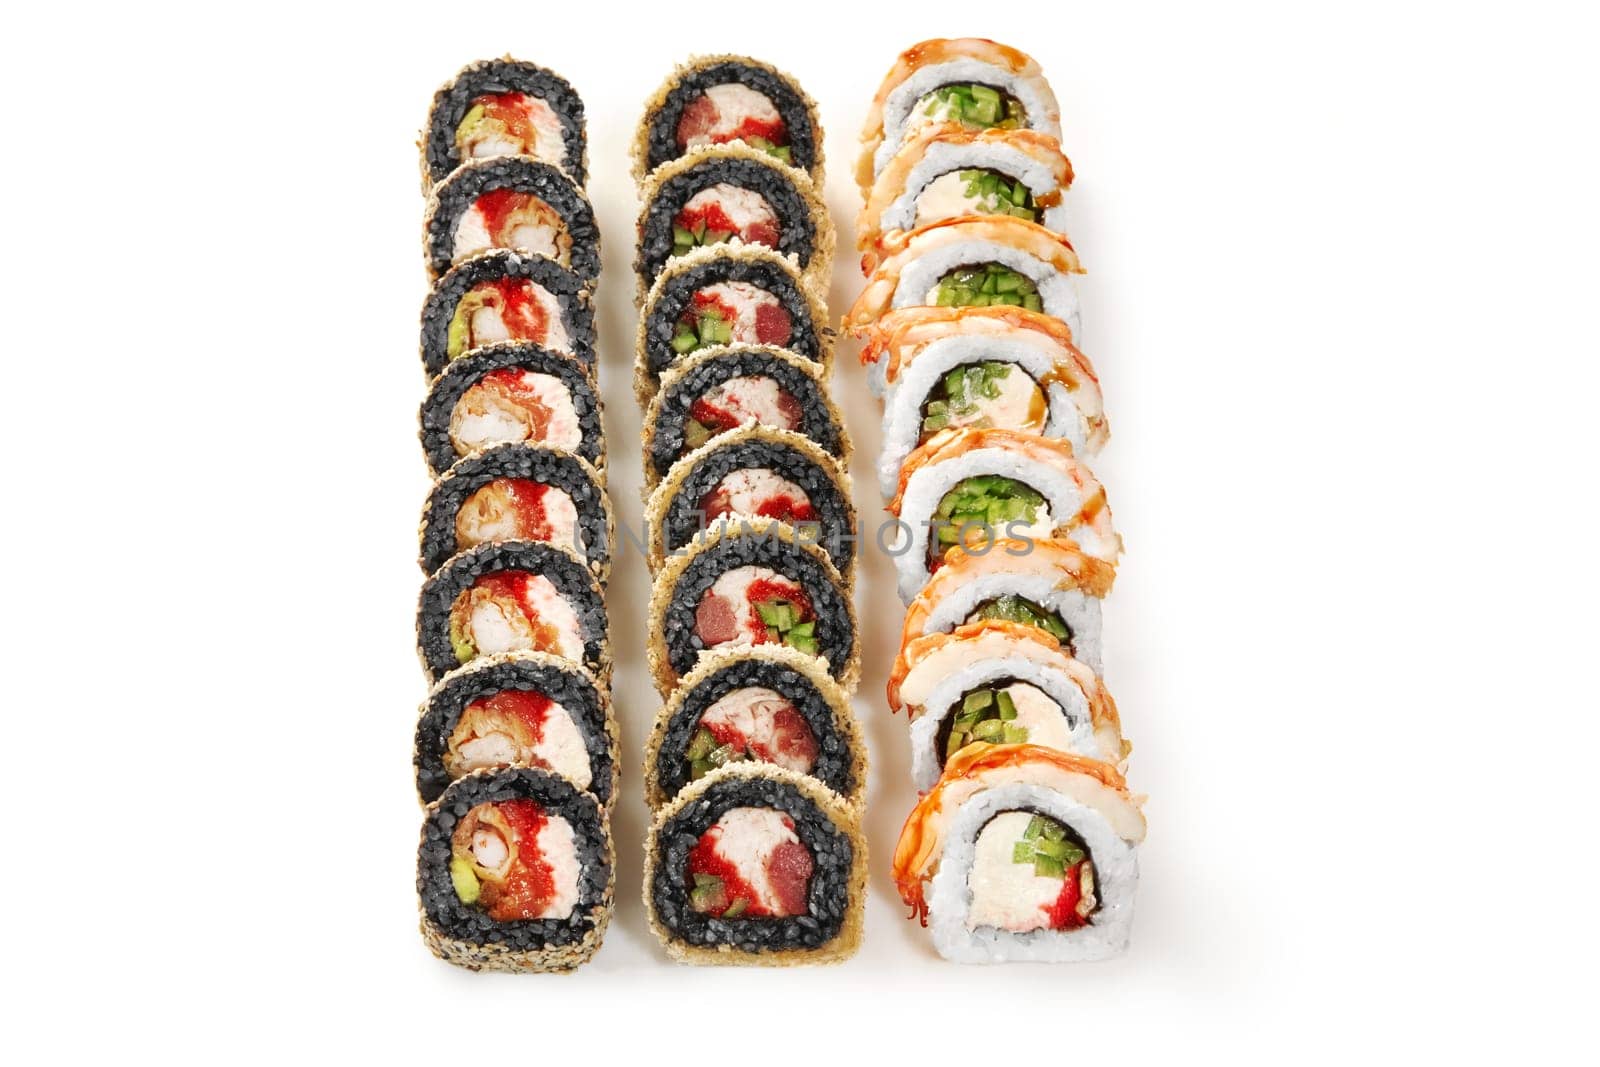 Exquisite sushi trio: tempura, uramaki, classic shrimp rolls by nazarovsergey